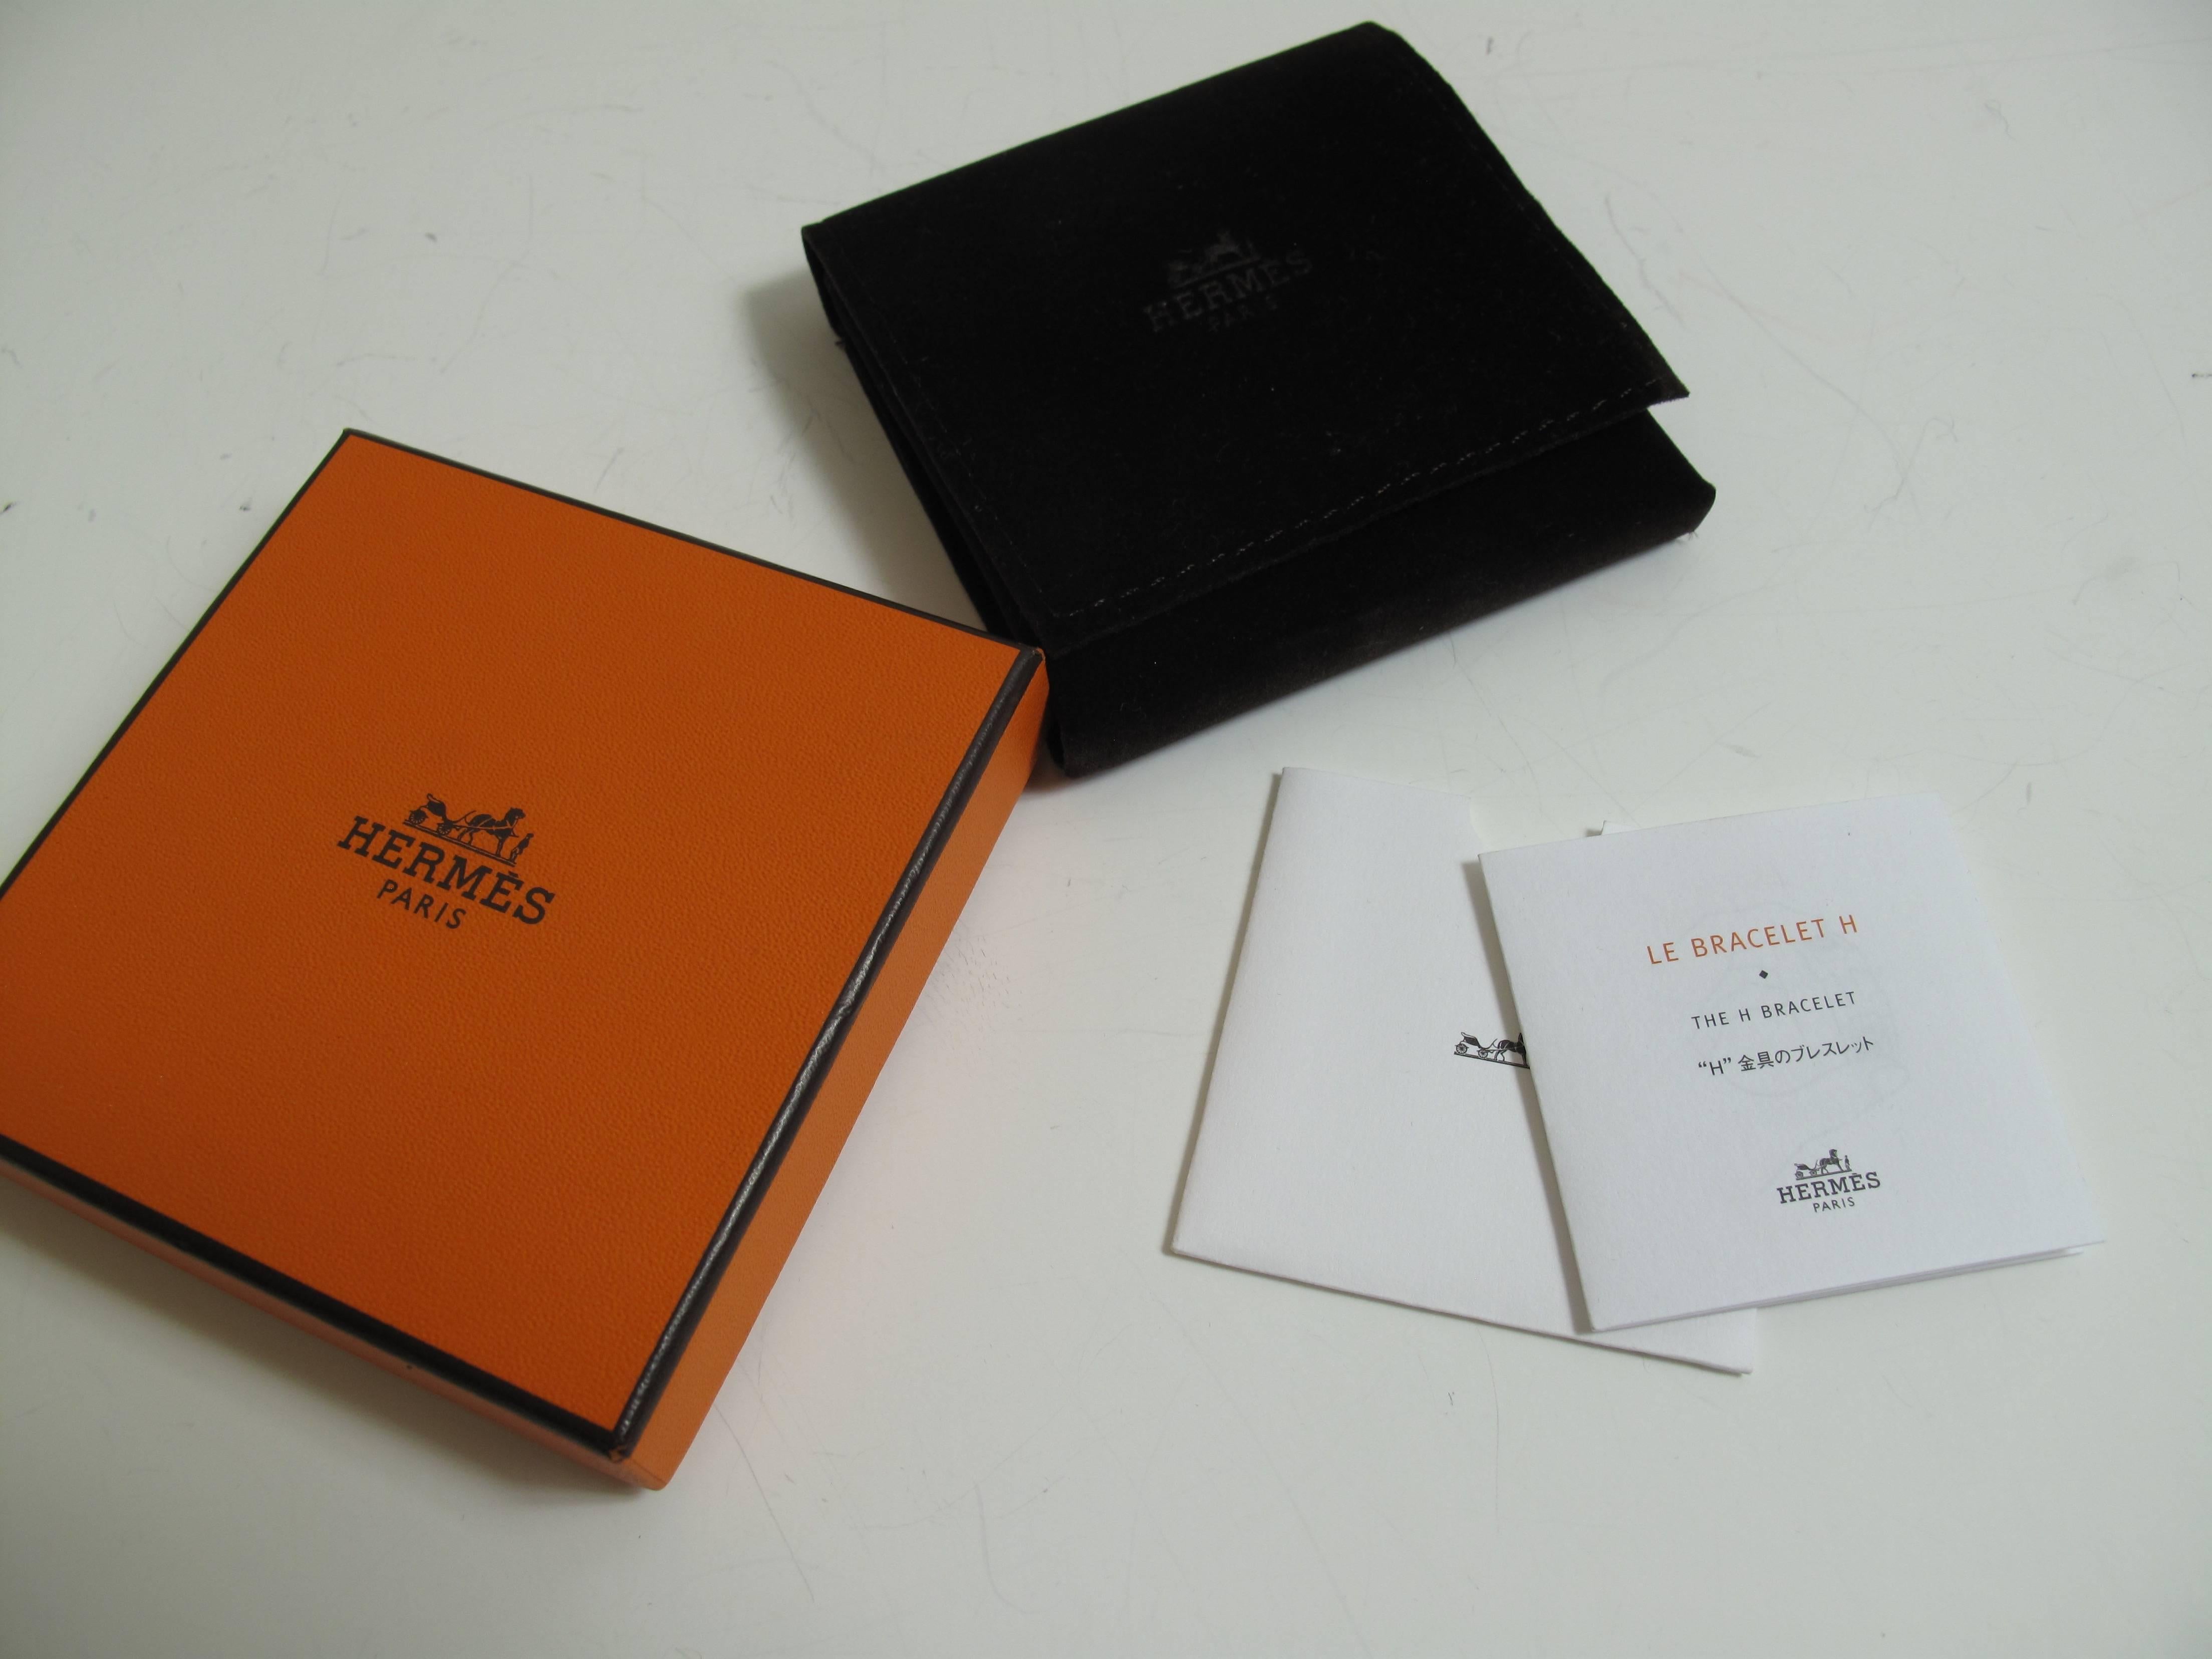 Hermes Orange enamel H Bracelet with box and velvet pouch.  Condition: Excellent
2.25